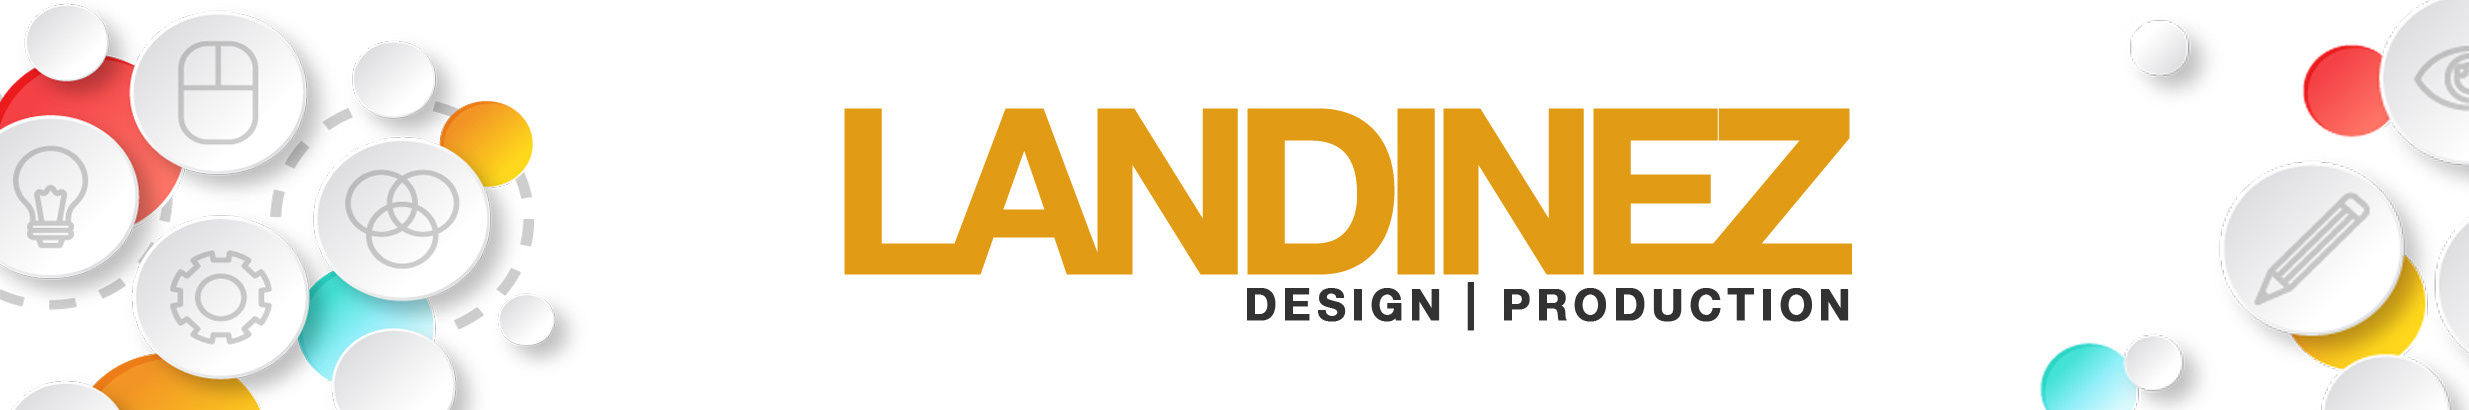 LANDINEZ DESIGN PRODUCTIONs profilbanner